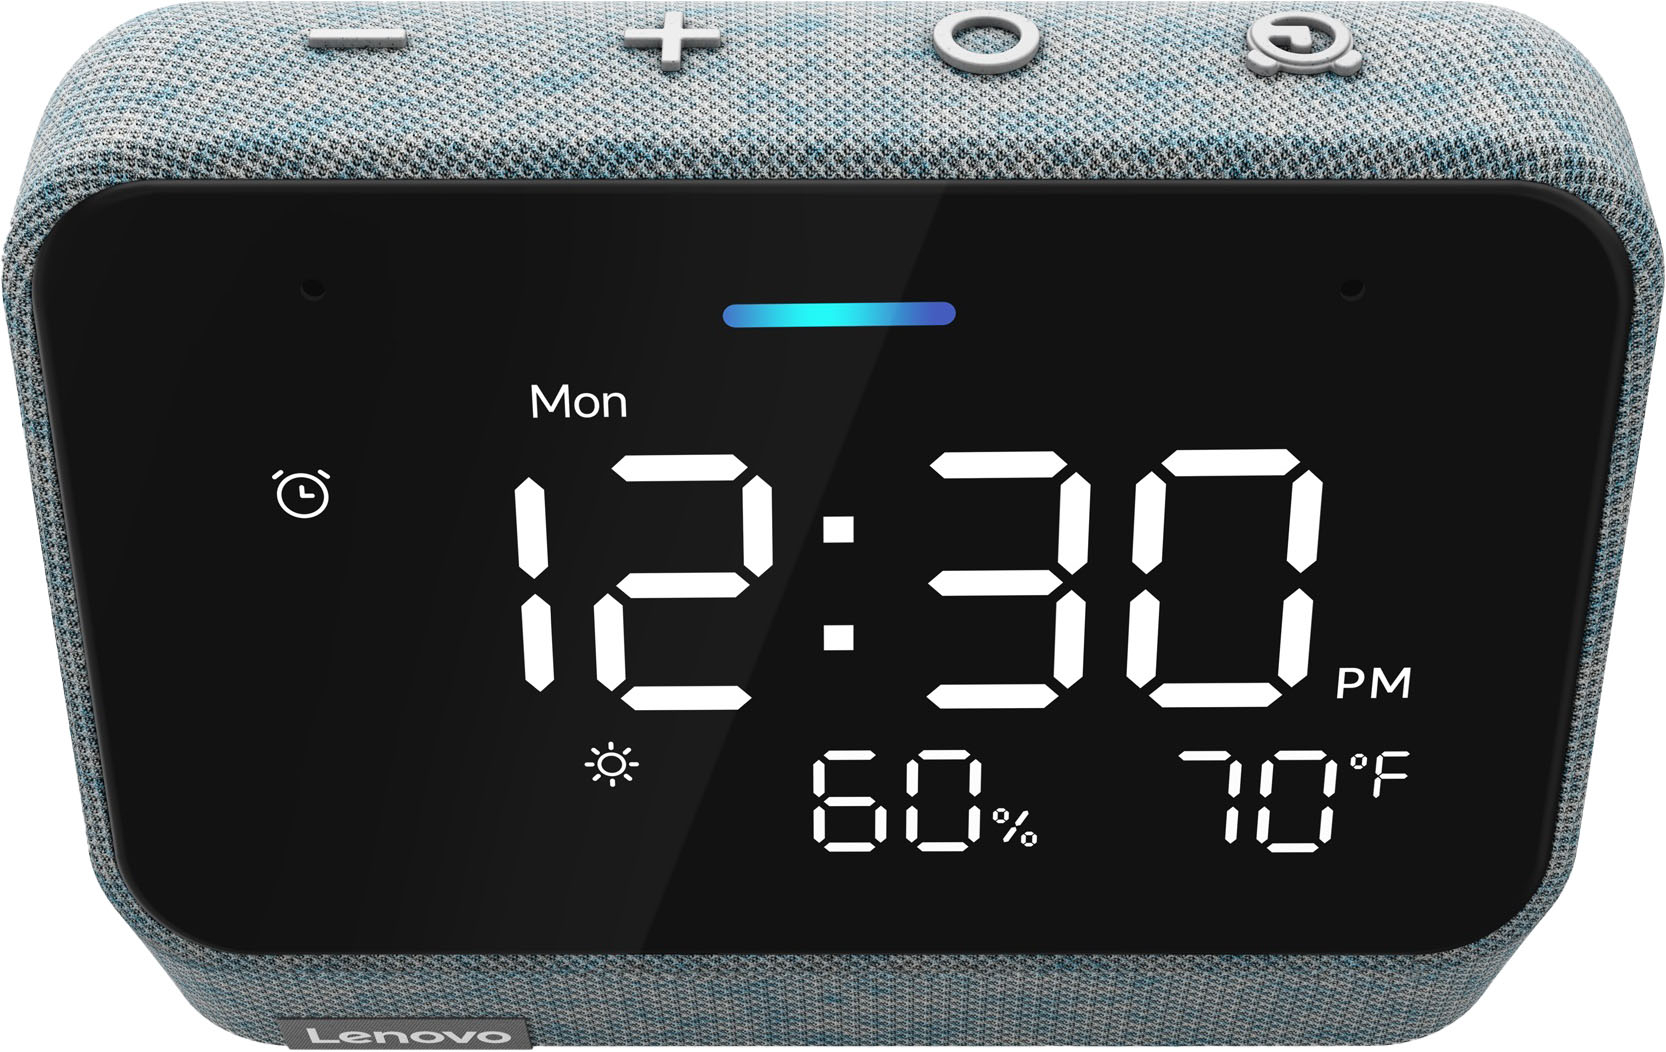 Best Buy: Lenovo Smart Clock Essential 4